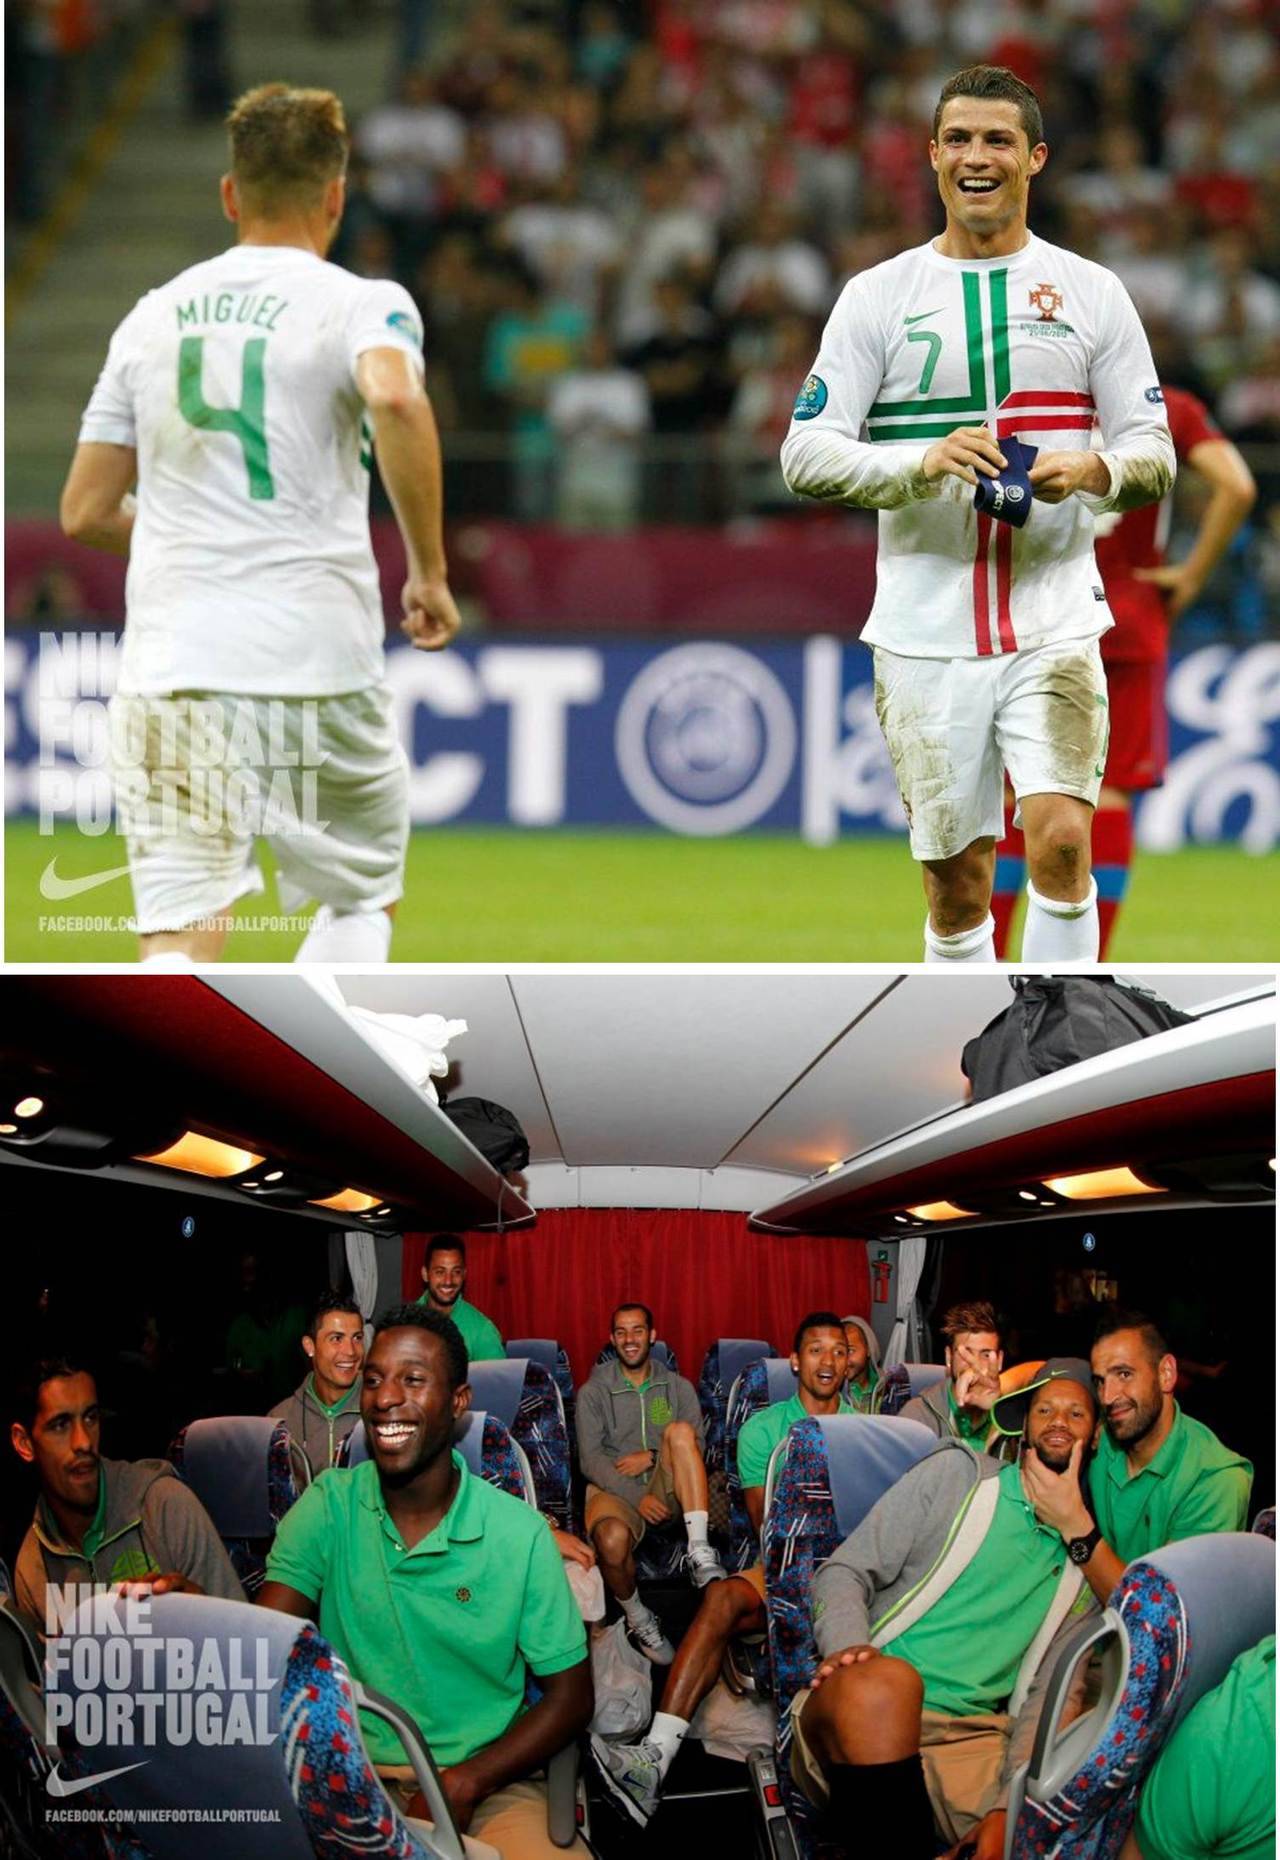 Joyful moments after the victory  :o)
EURO 2012 - 1/4 final Portugal vs. Czech Republic 1:0, 21.06.2012(more pics)